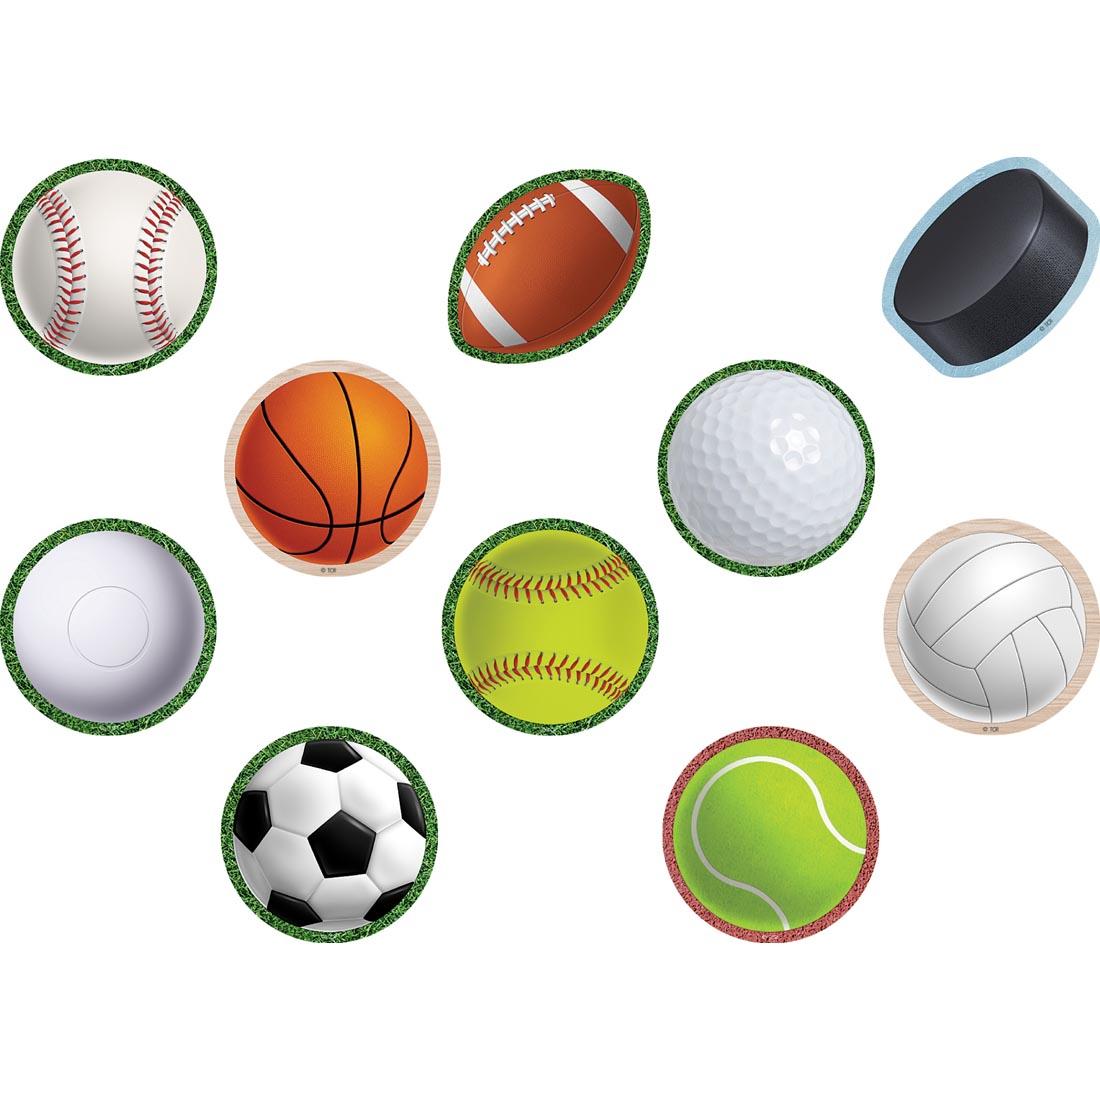 Sports Mini Accents include baseball, football, hockey puck, basketball, golf ball, tennis ball, volleyball, softball, soccer ball